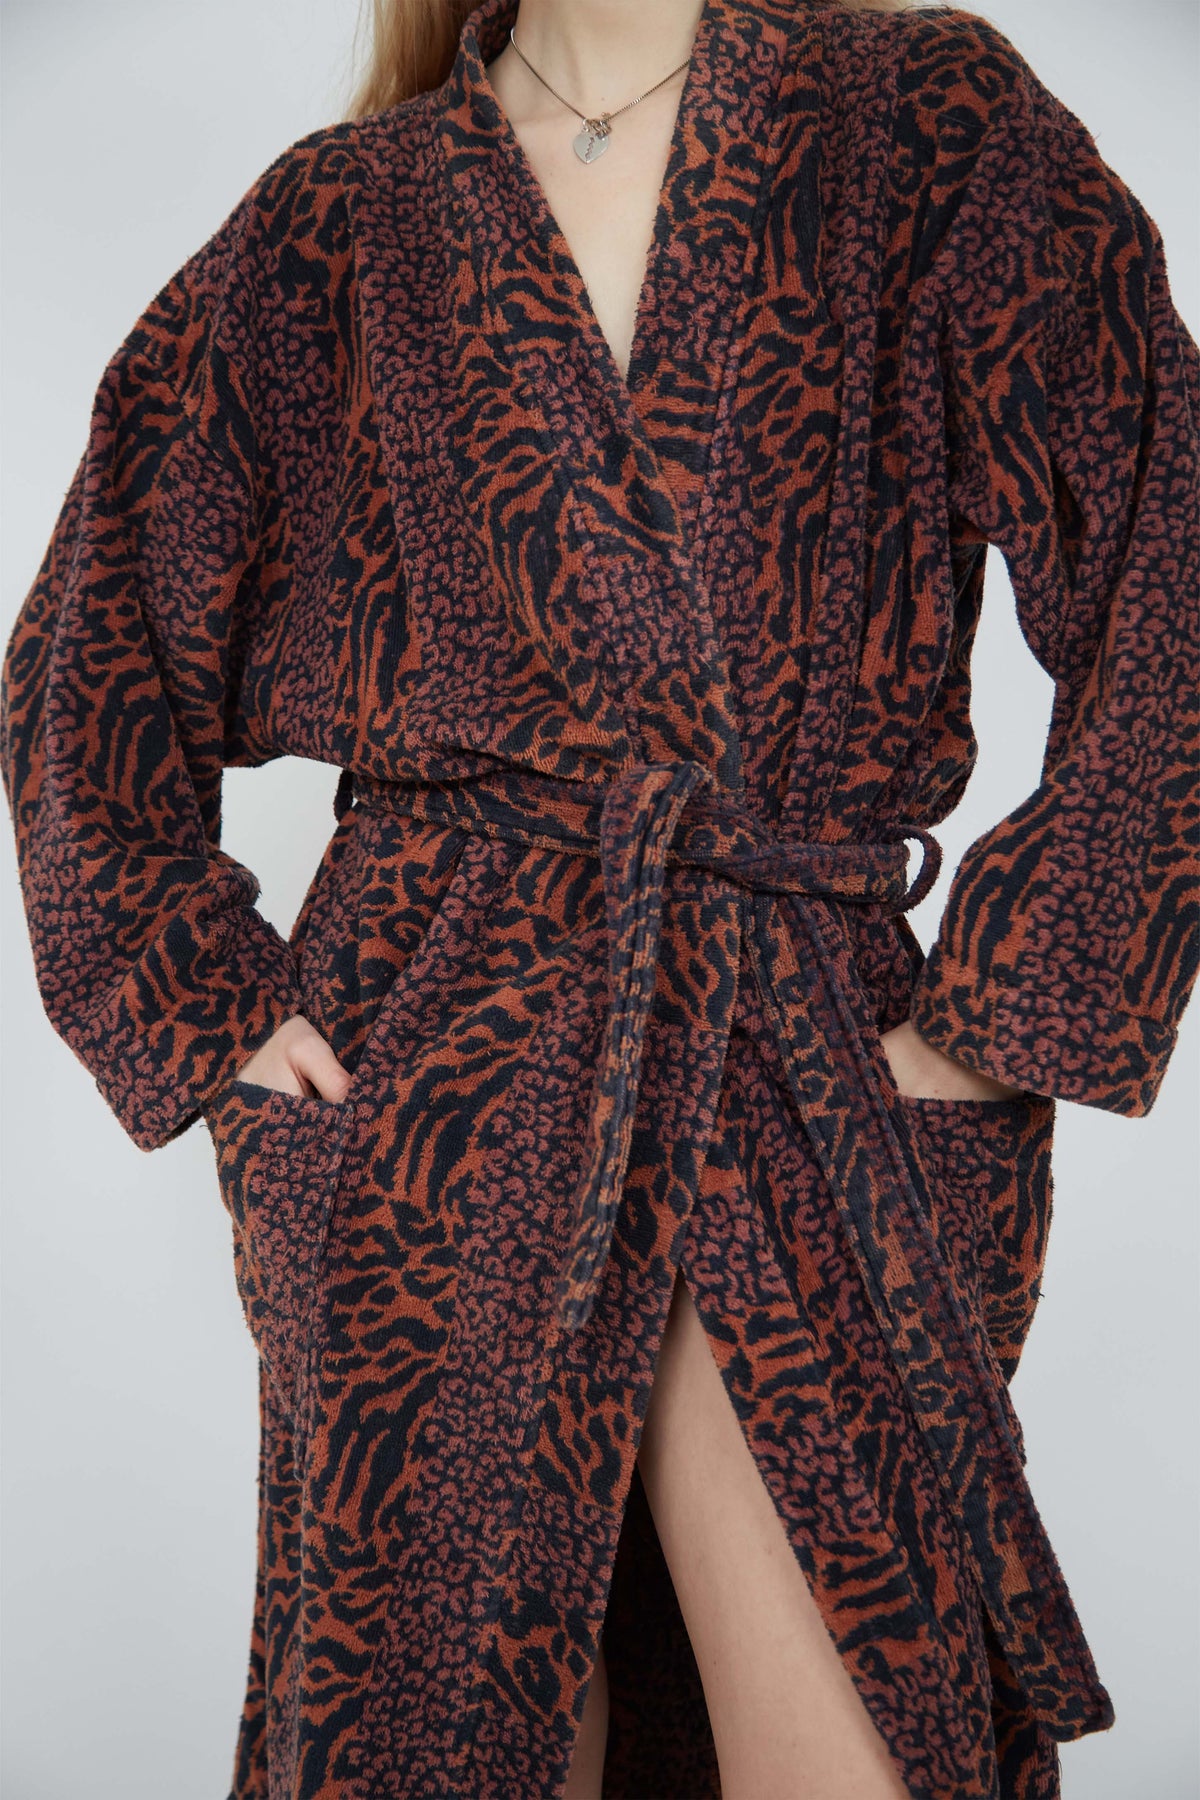 Yves Saint Laurent terry robe